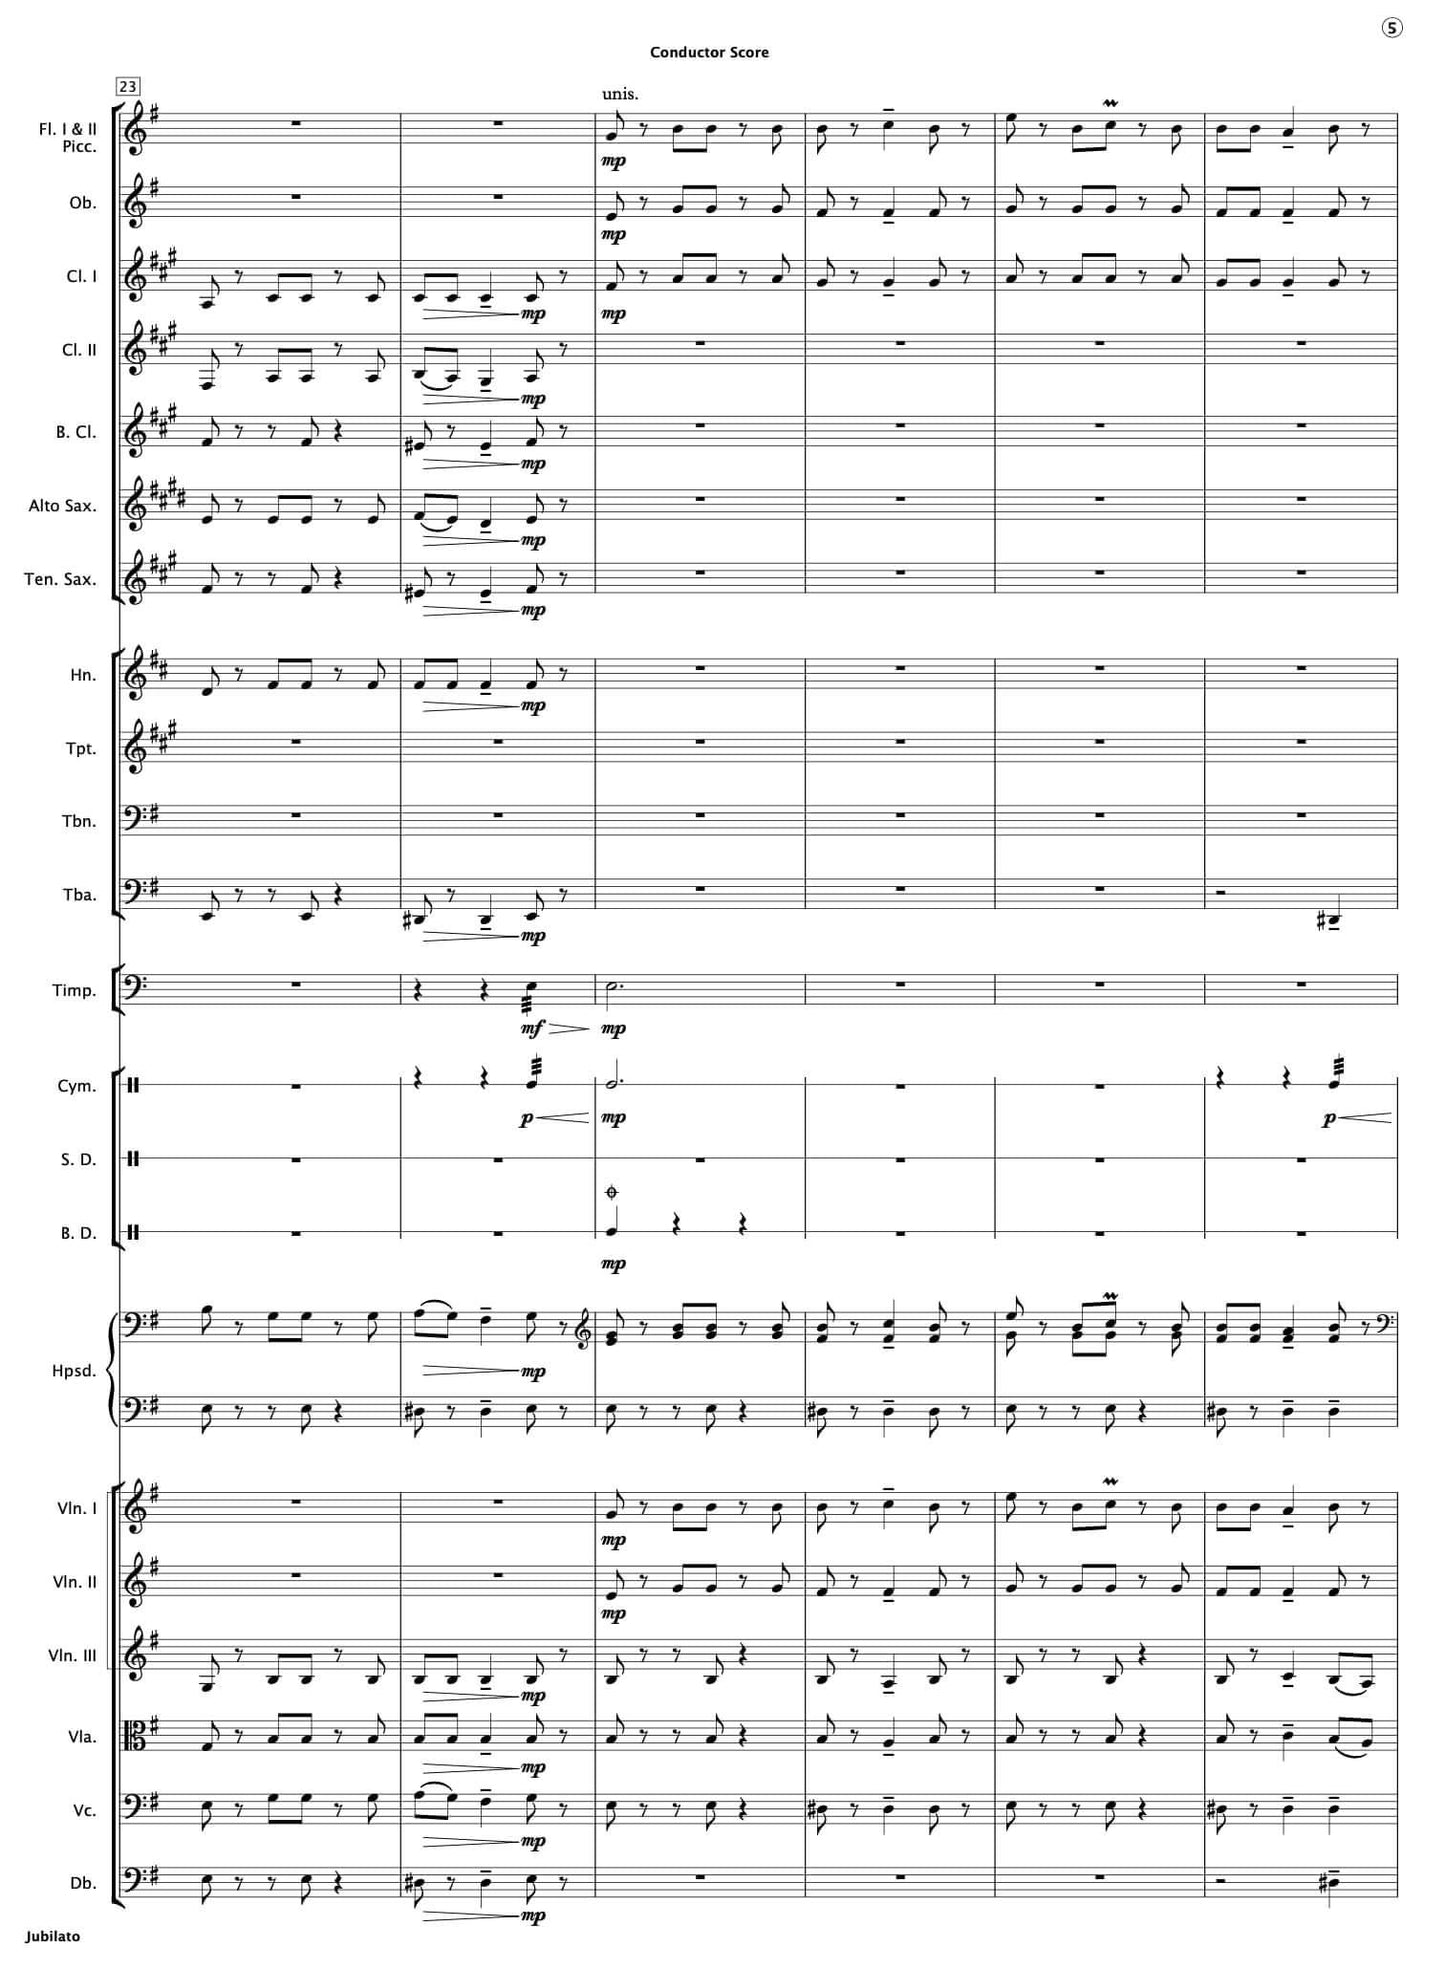 Jubilato [Full Orchestra] - Paul Barker Music 